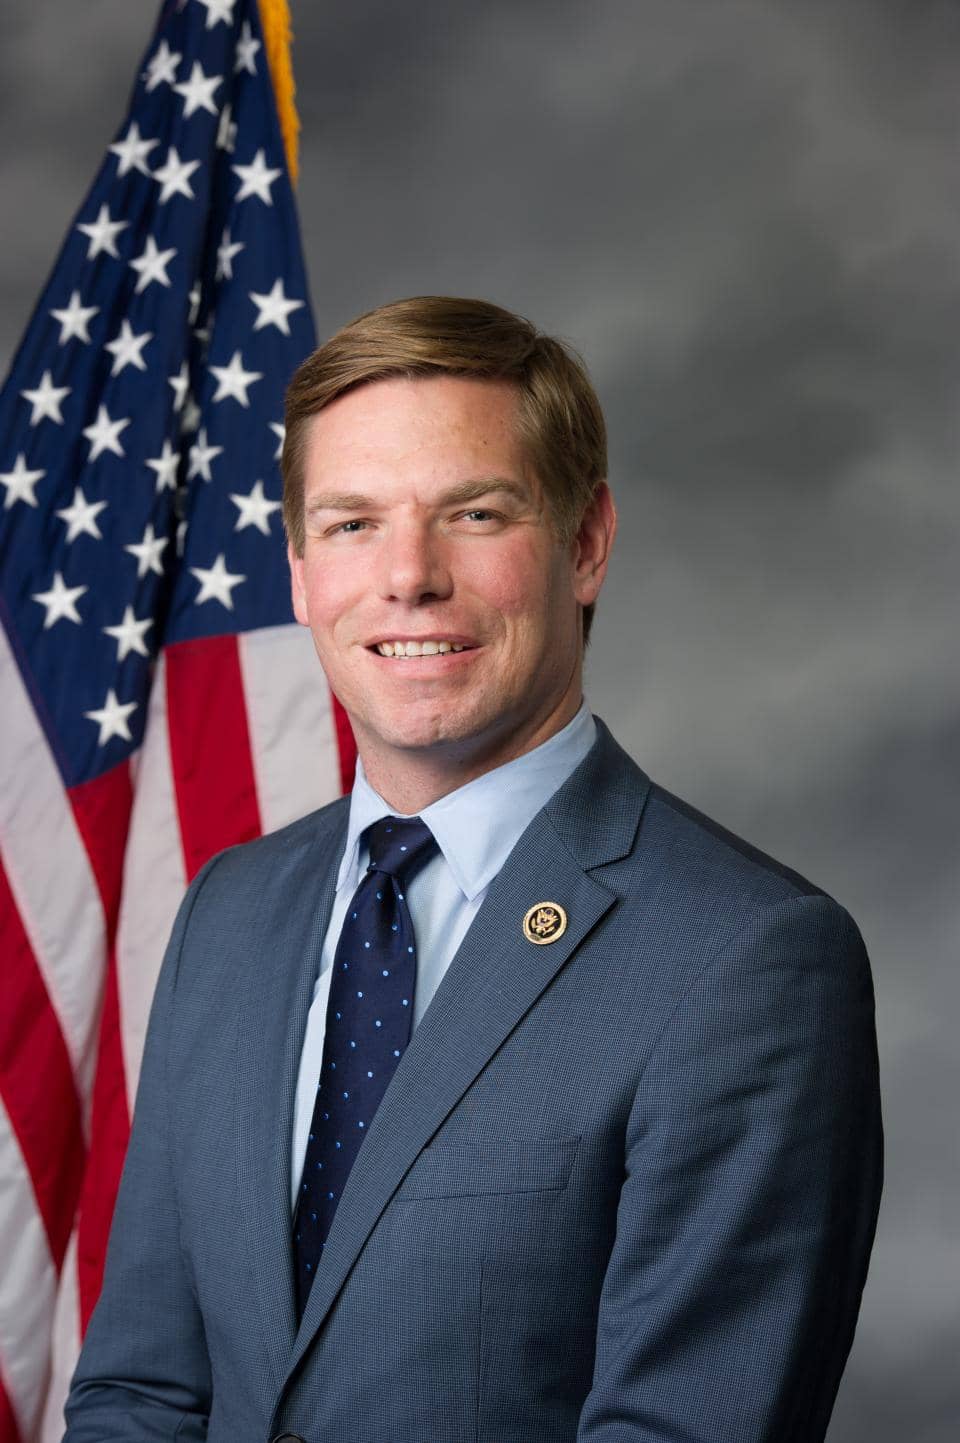 Image of Eric Swalwell, U.S. House of Representatives, Democratic Party